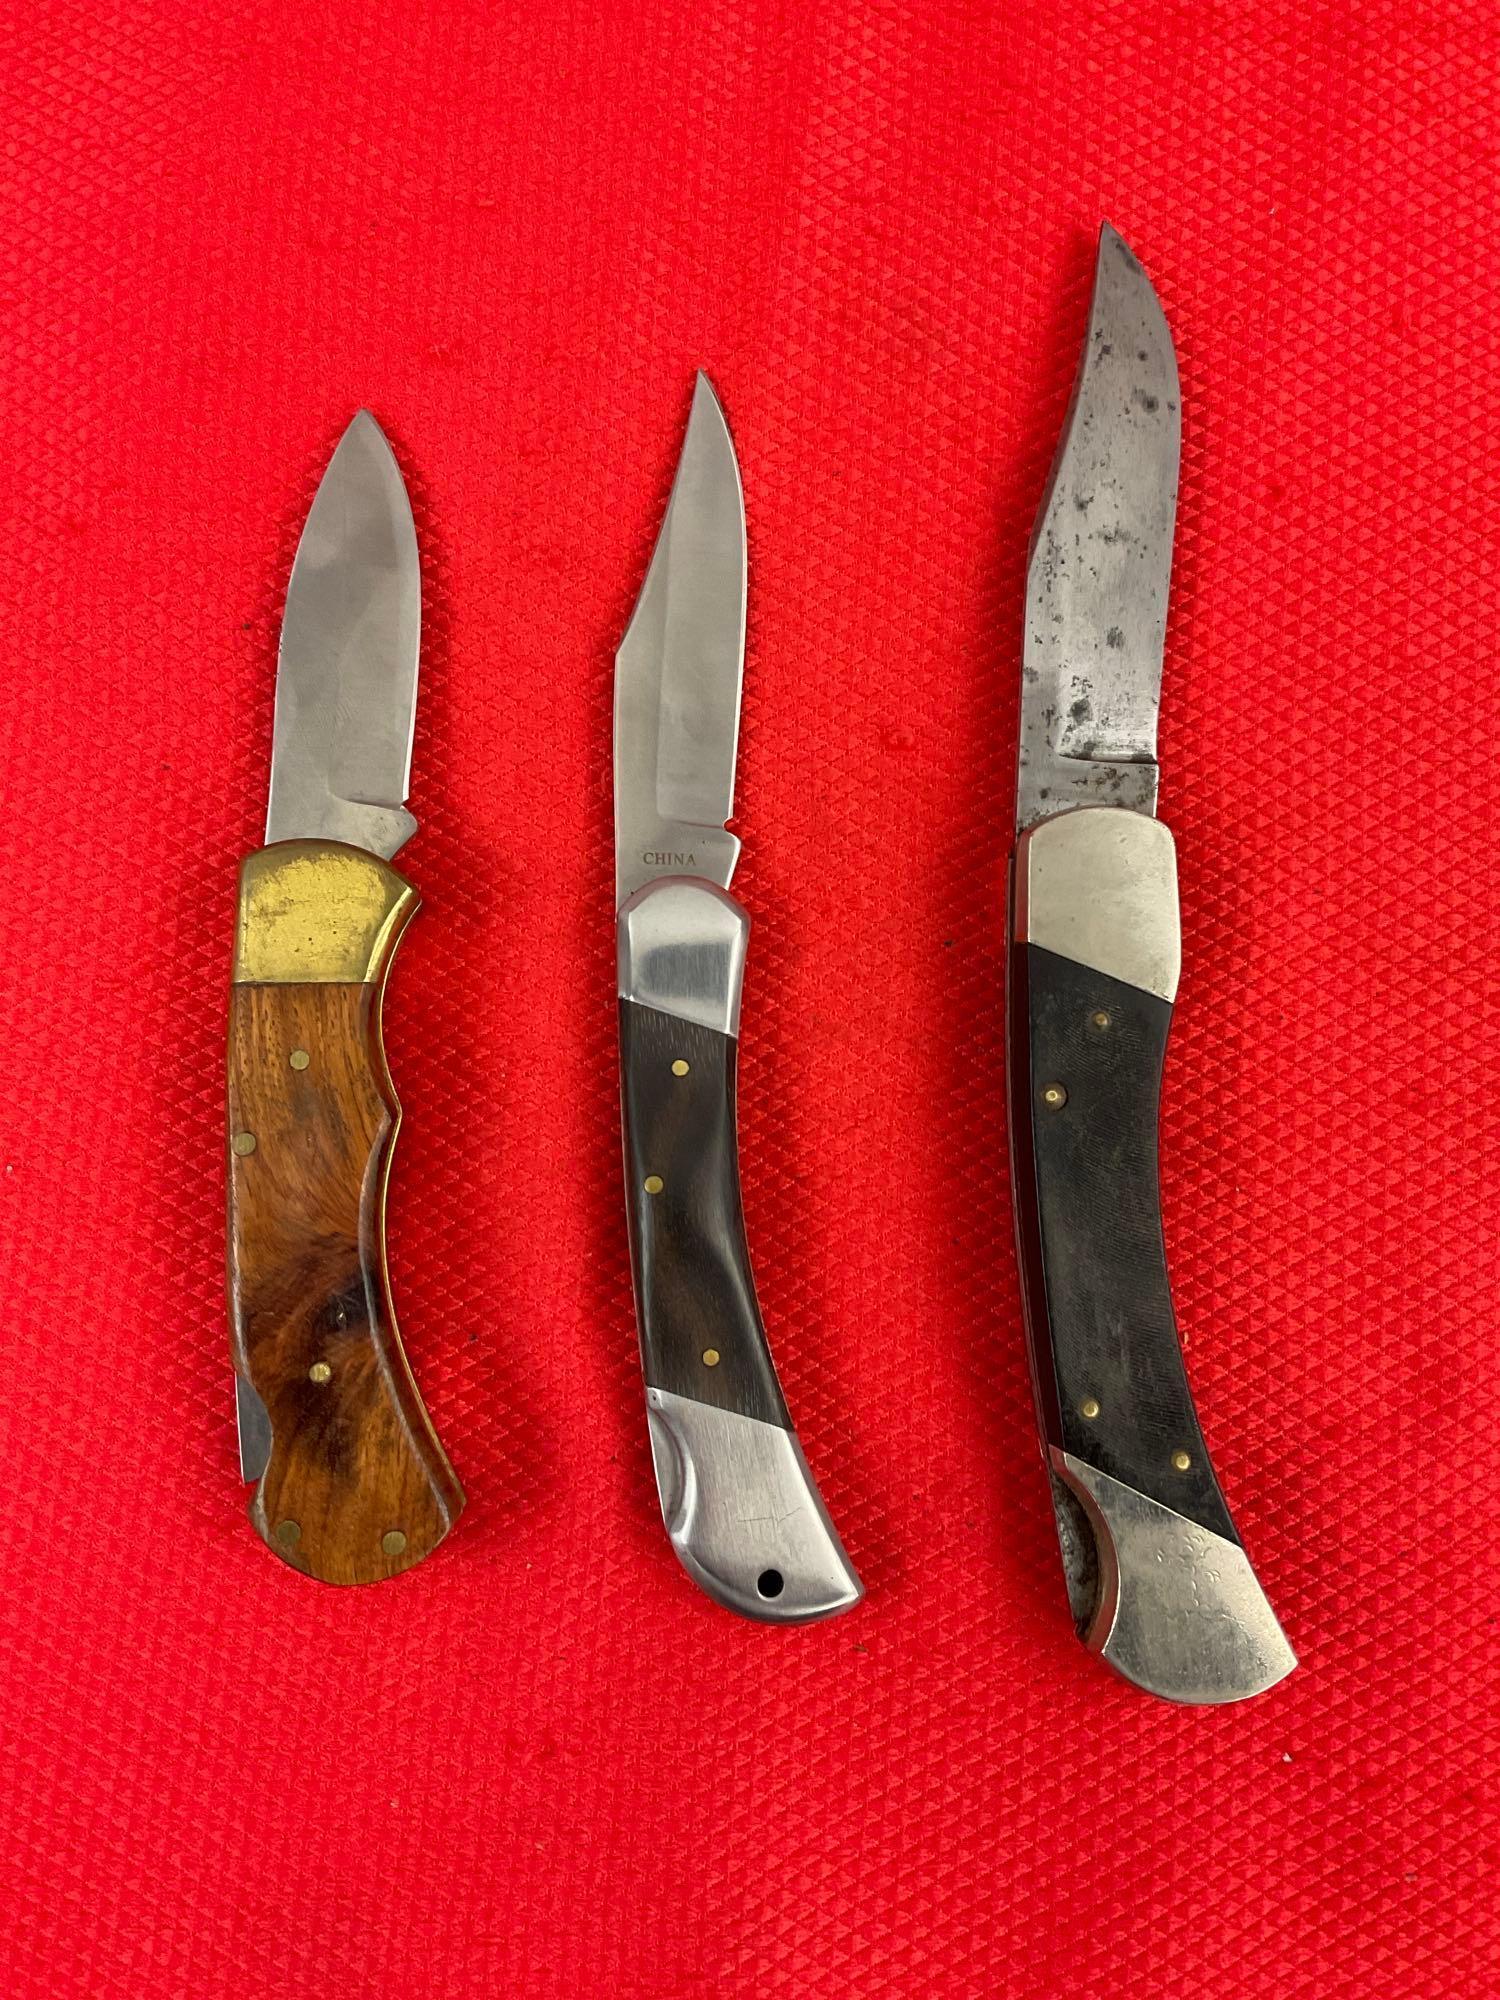 3 pcs Steel Folding Blade Pocket Knives. Vintage Ranger Prov. LB-125 w/ Original Sheath. See pics.